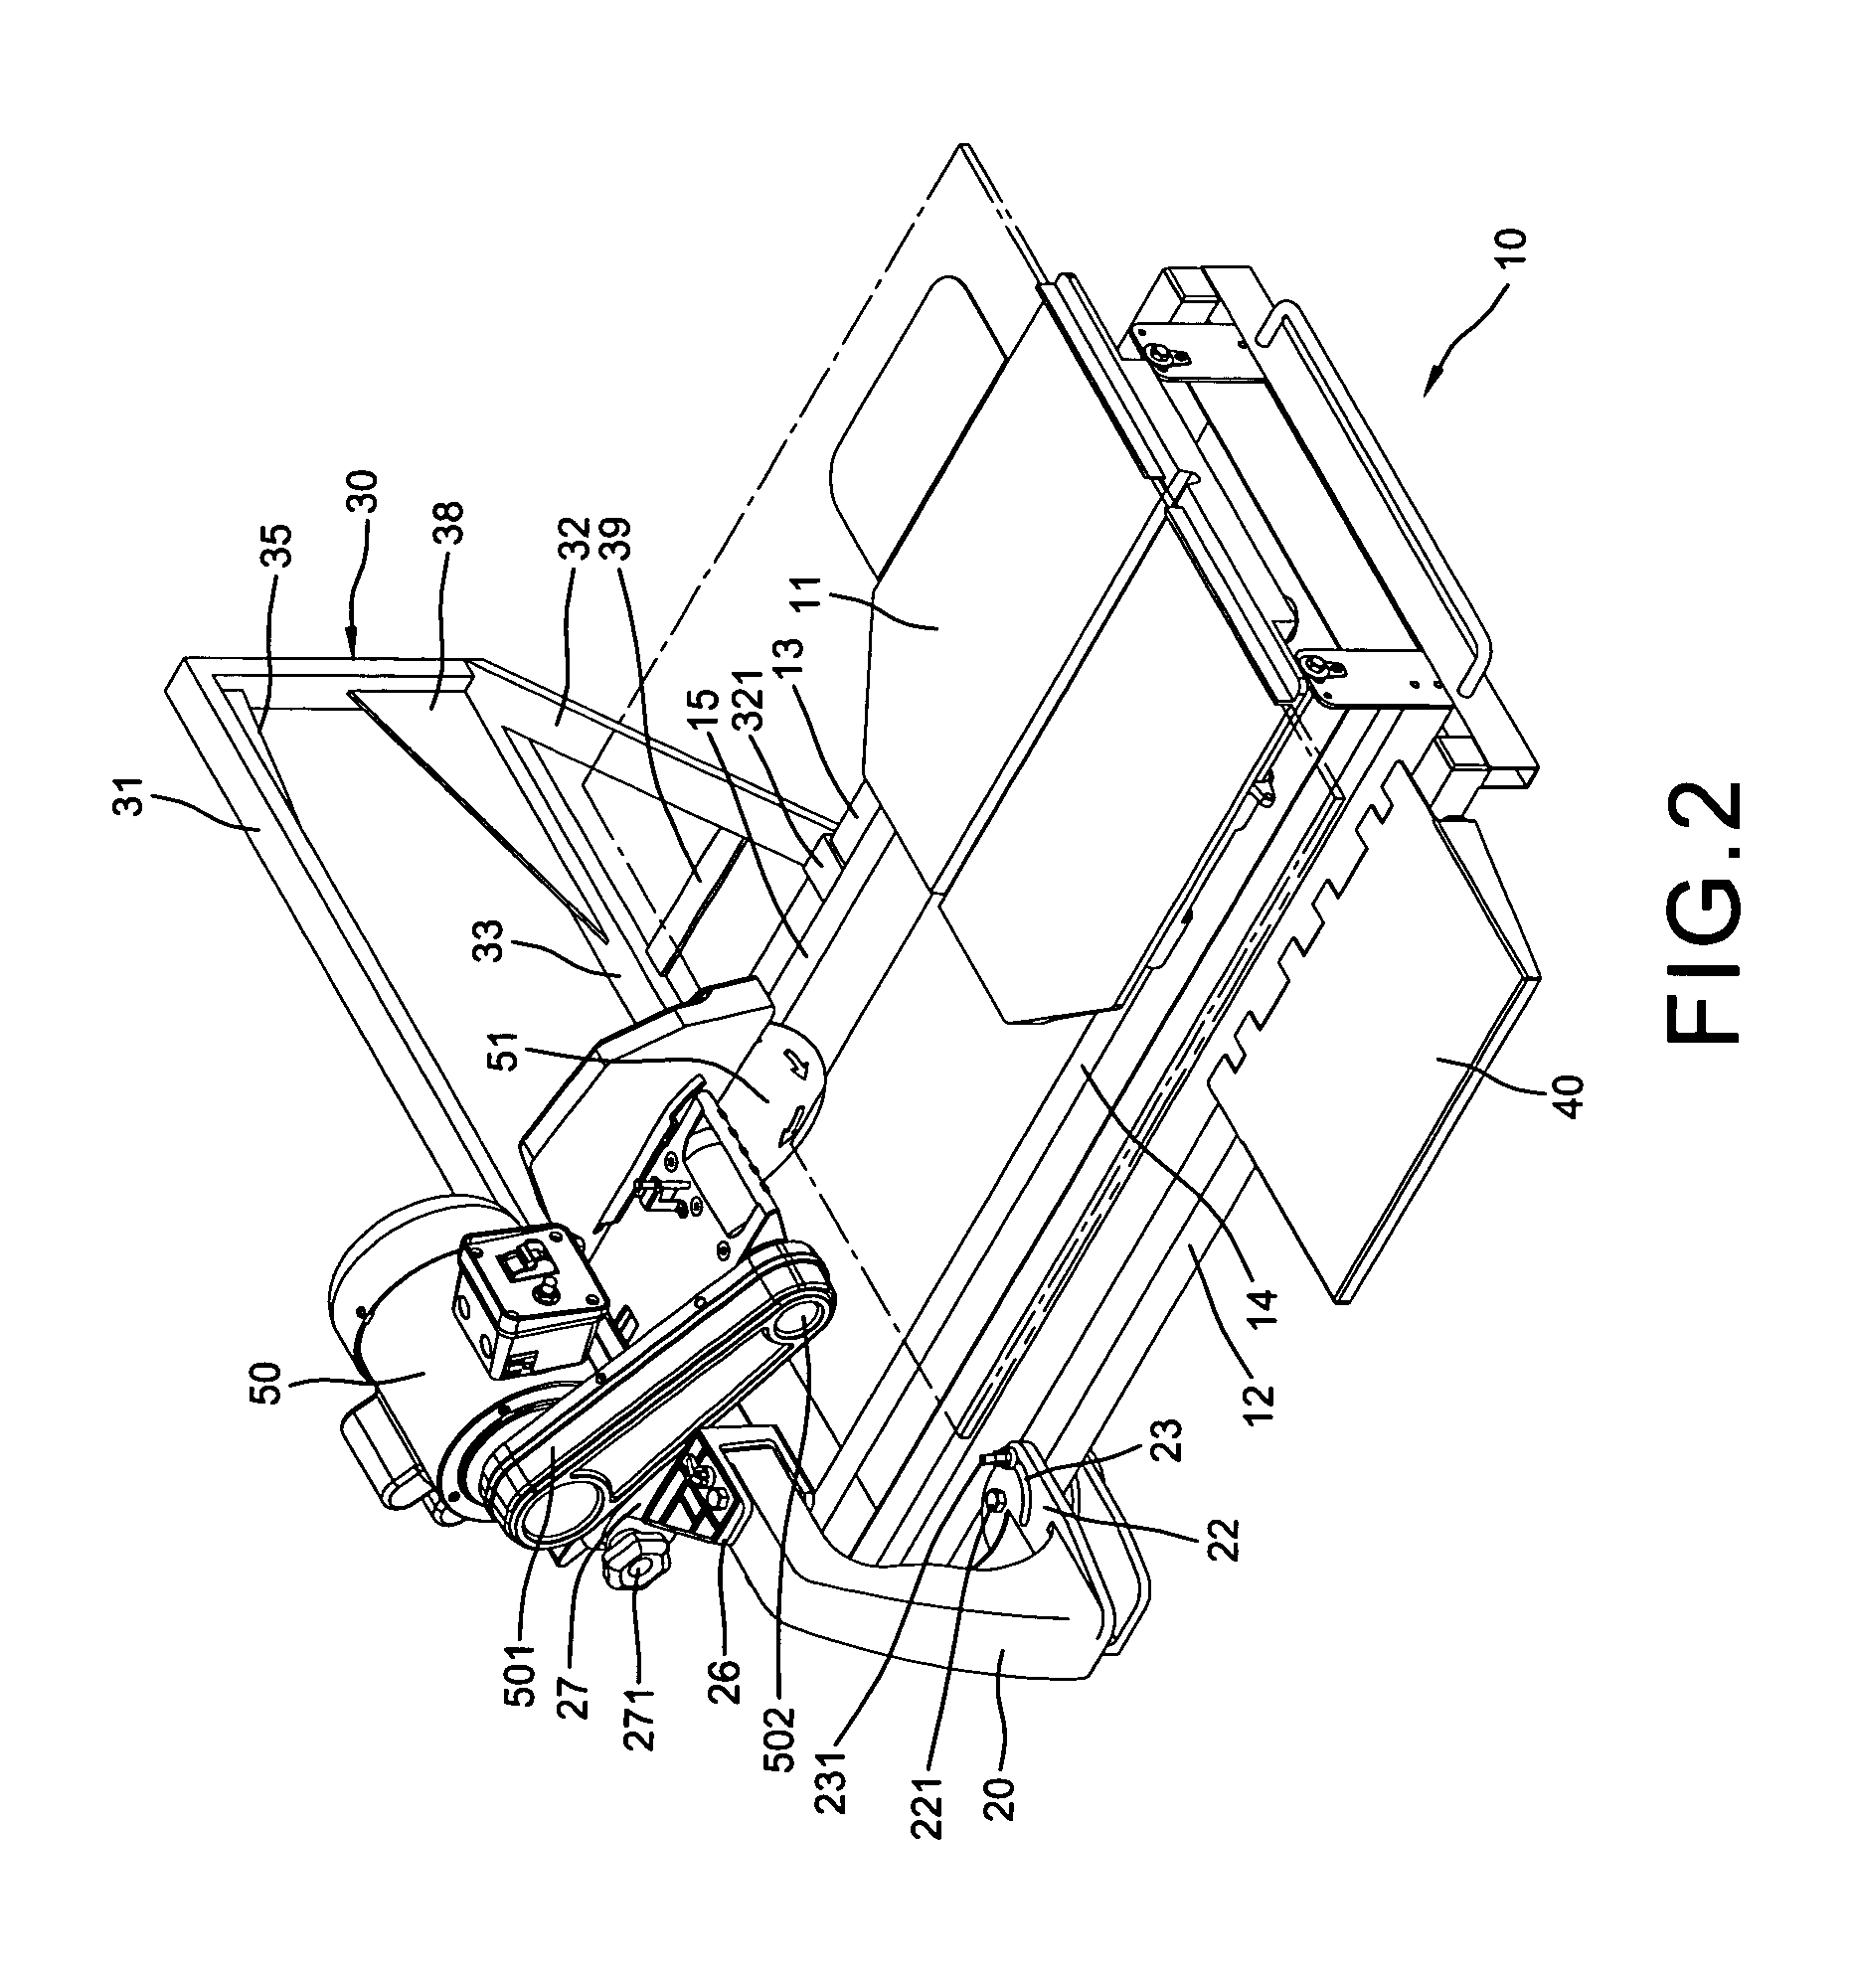 Portable stone cutter